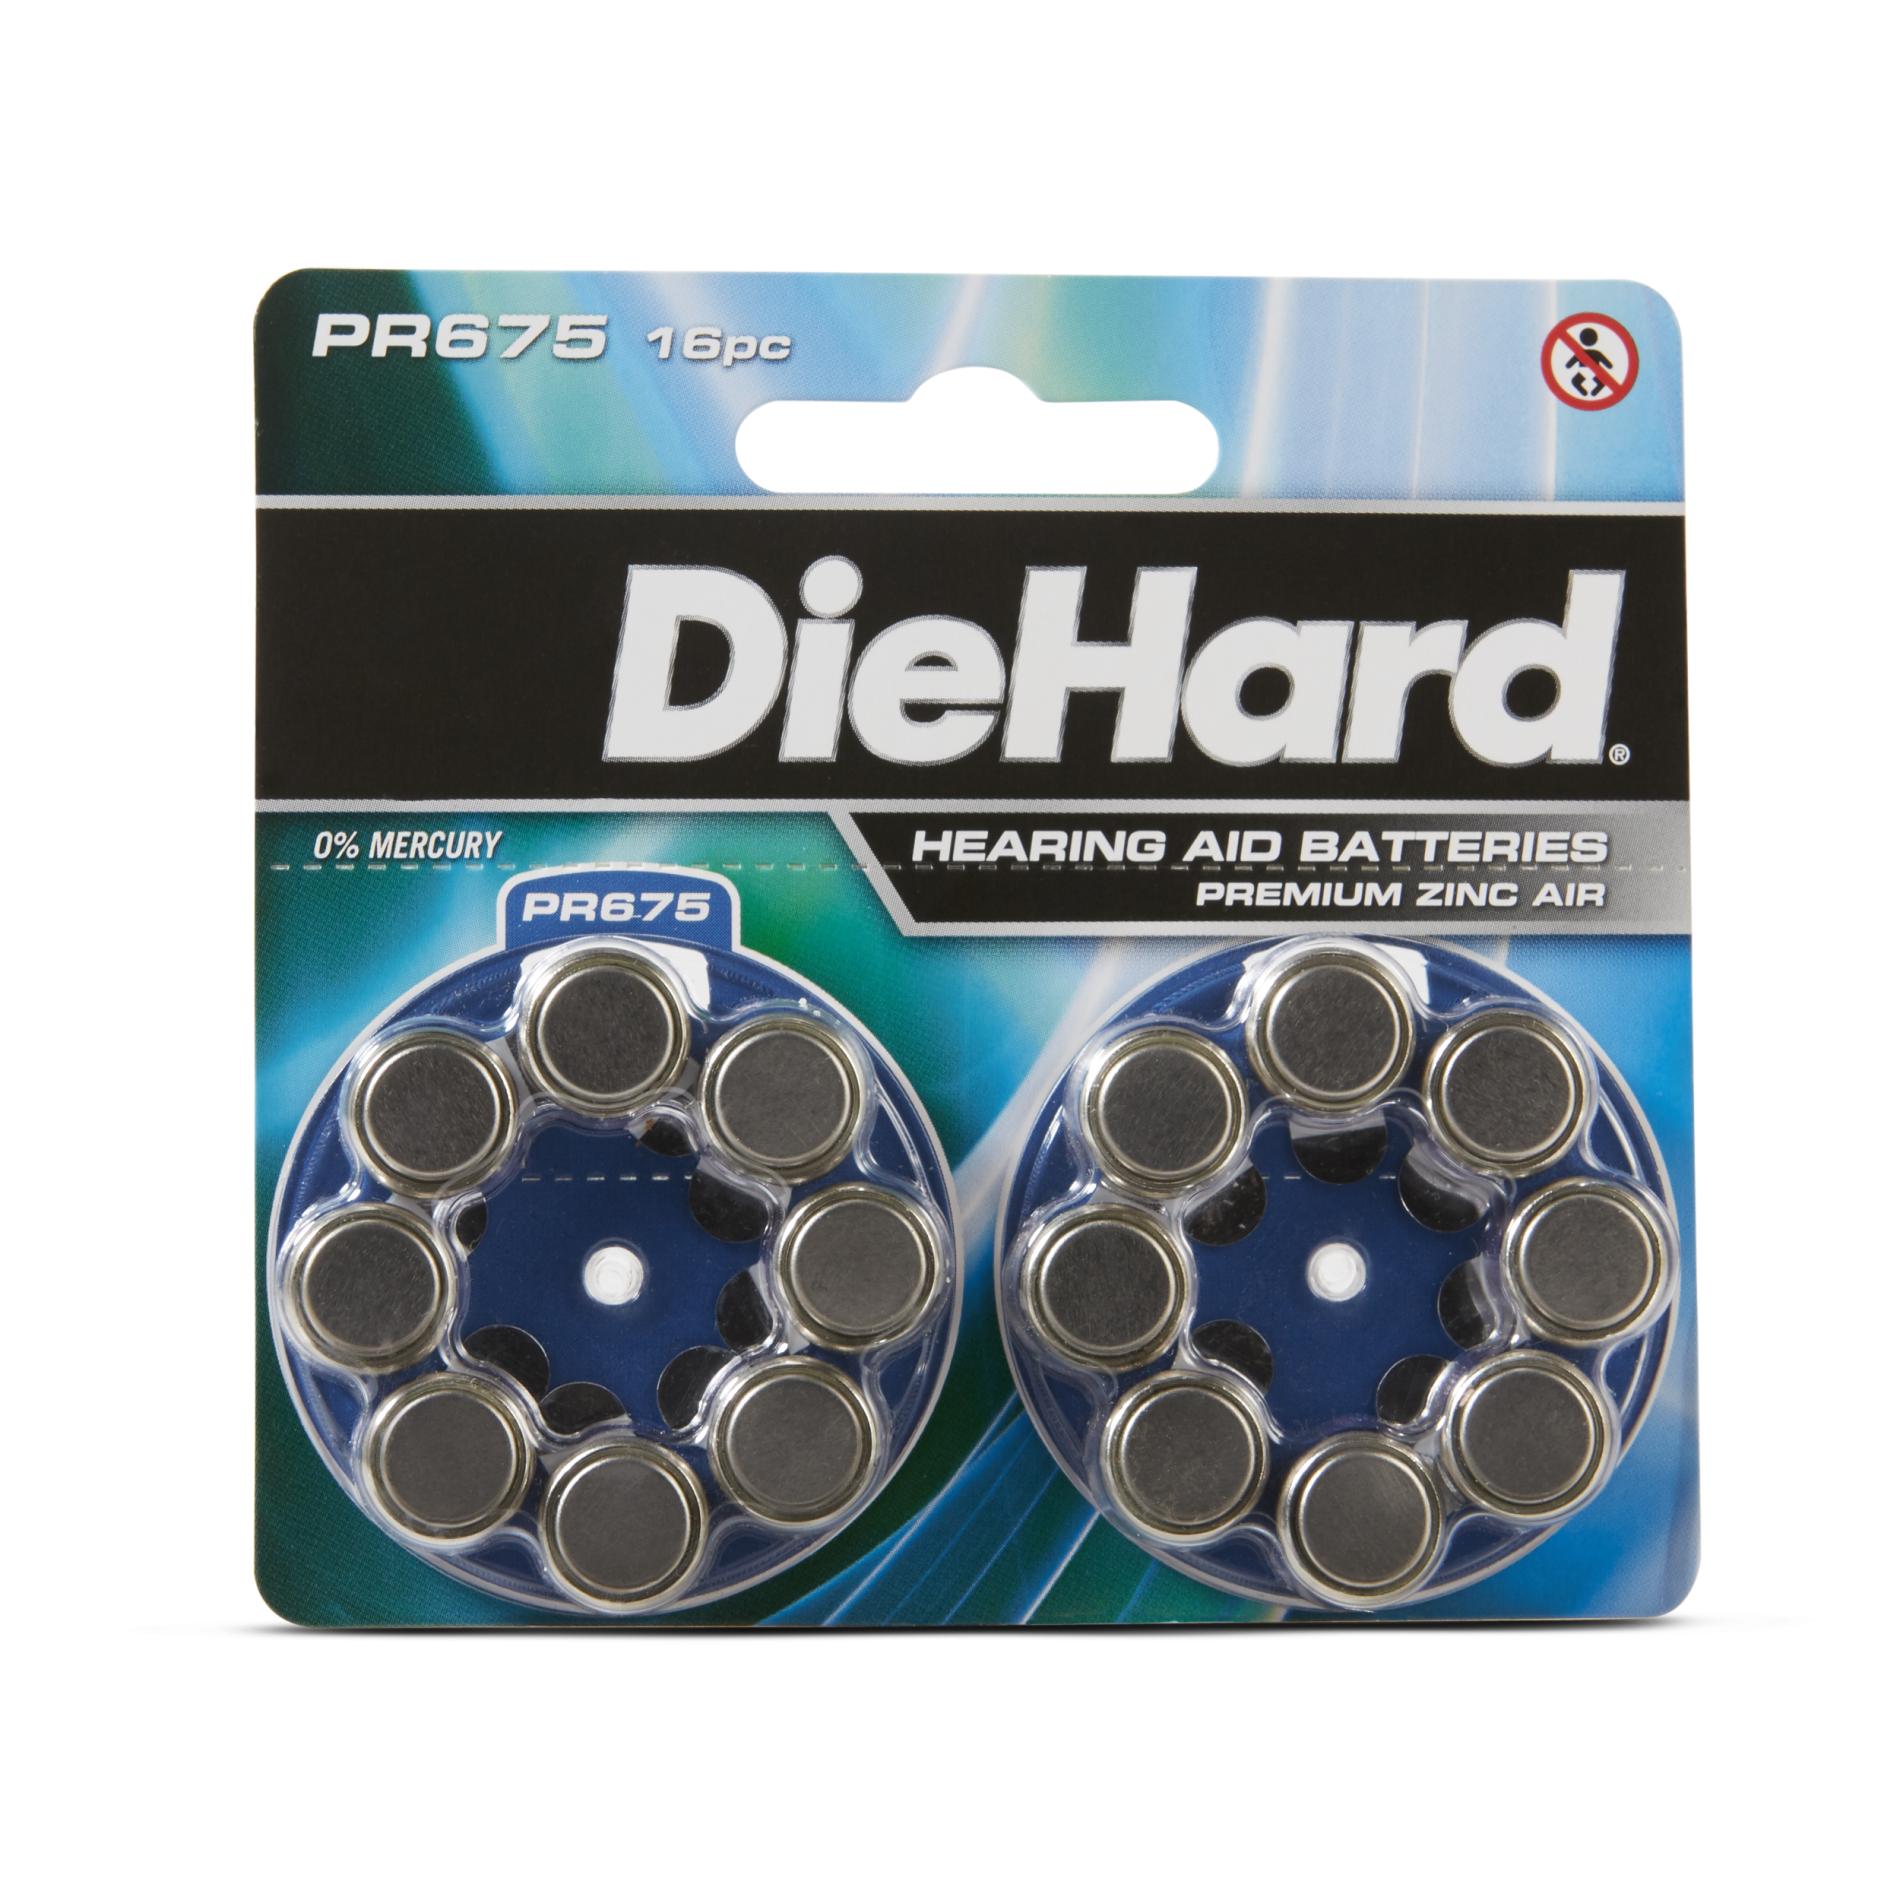 DieHard 411287 PR675 Hearing Aid Batteries - 16 Count